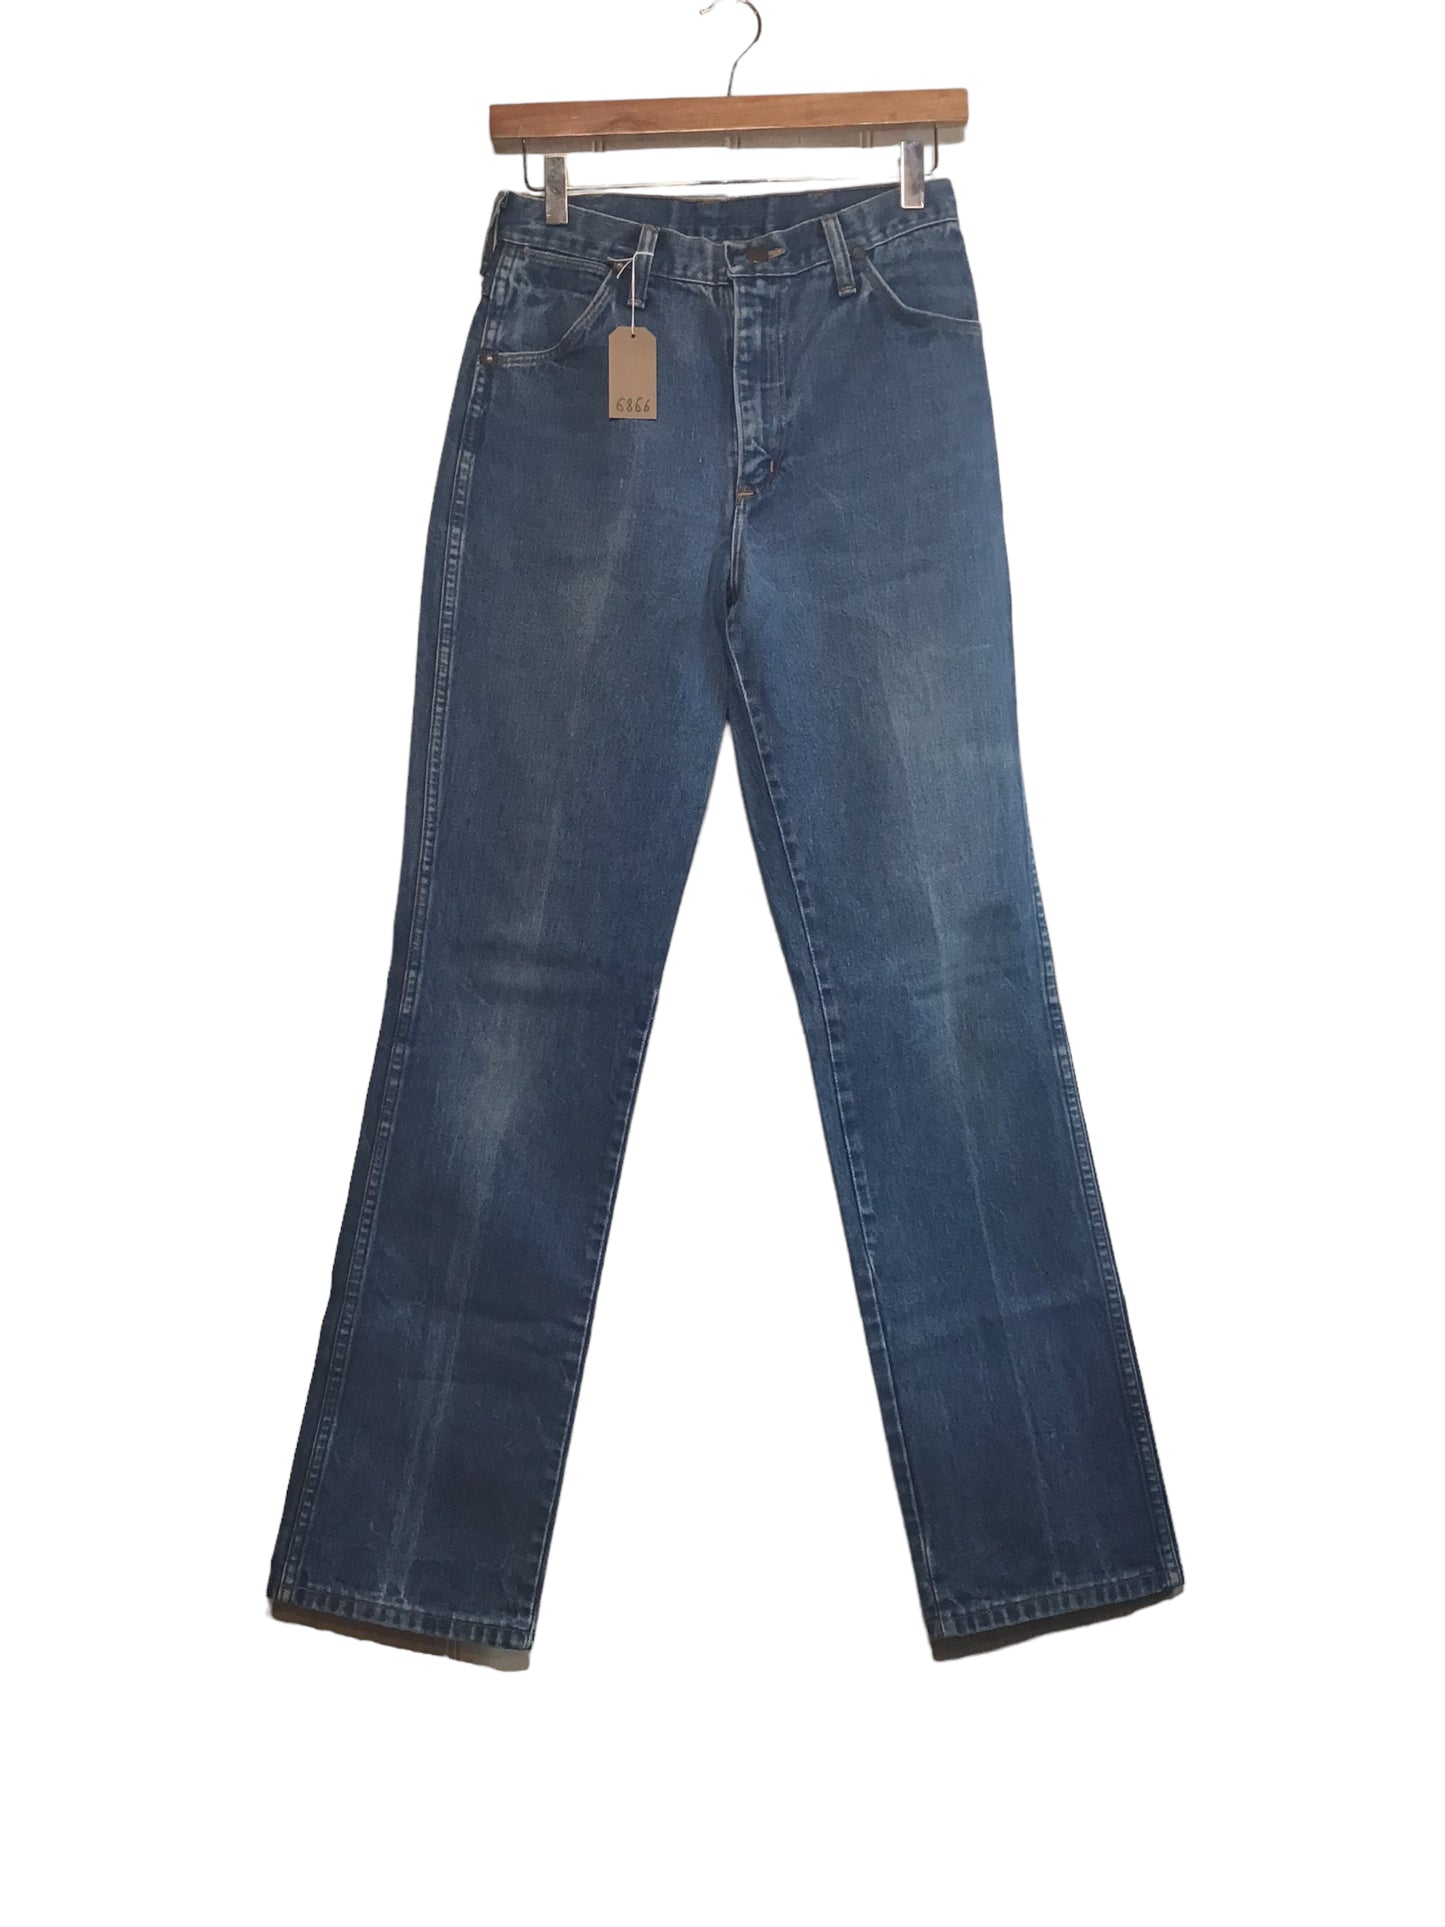 Wrangler Jeans (28x33)